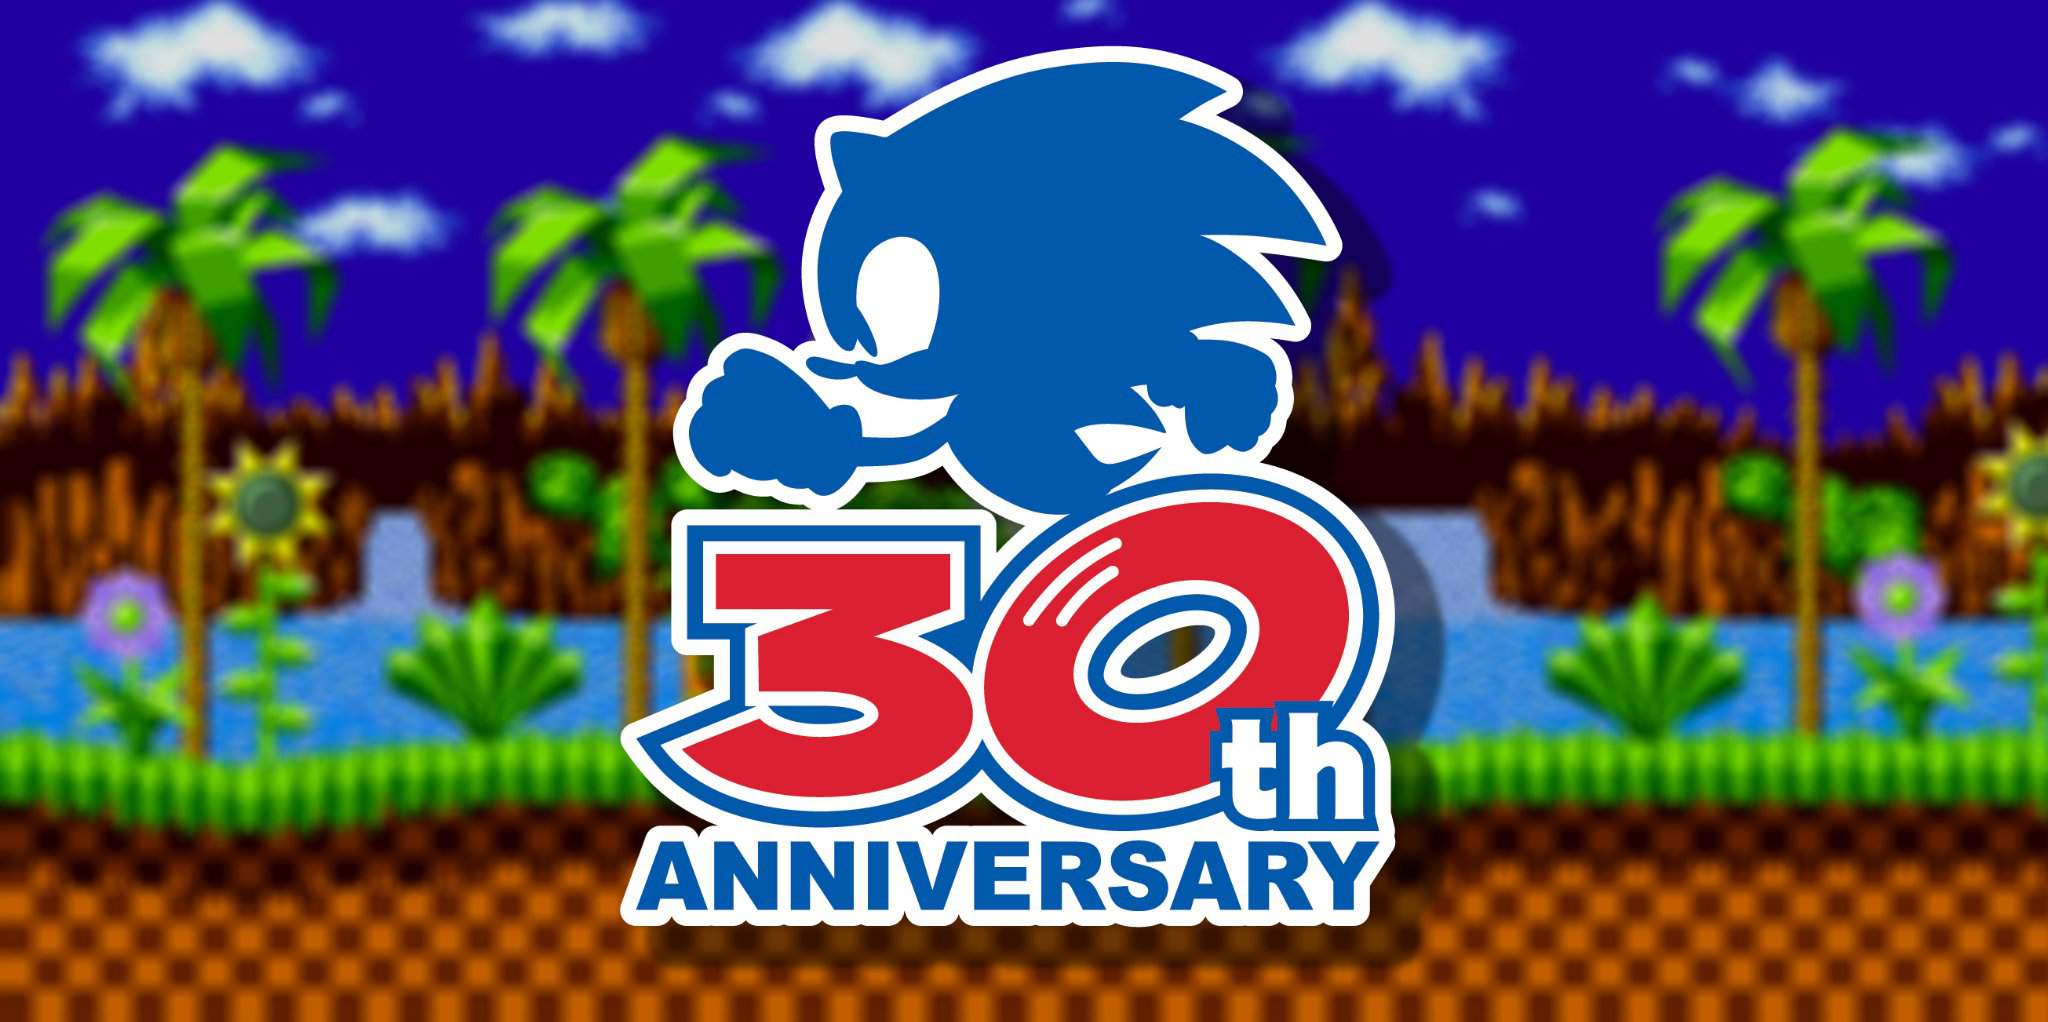 Sonic 30 Anos!